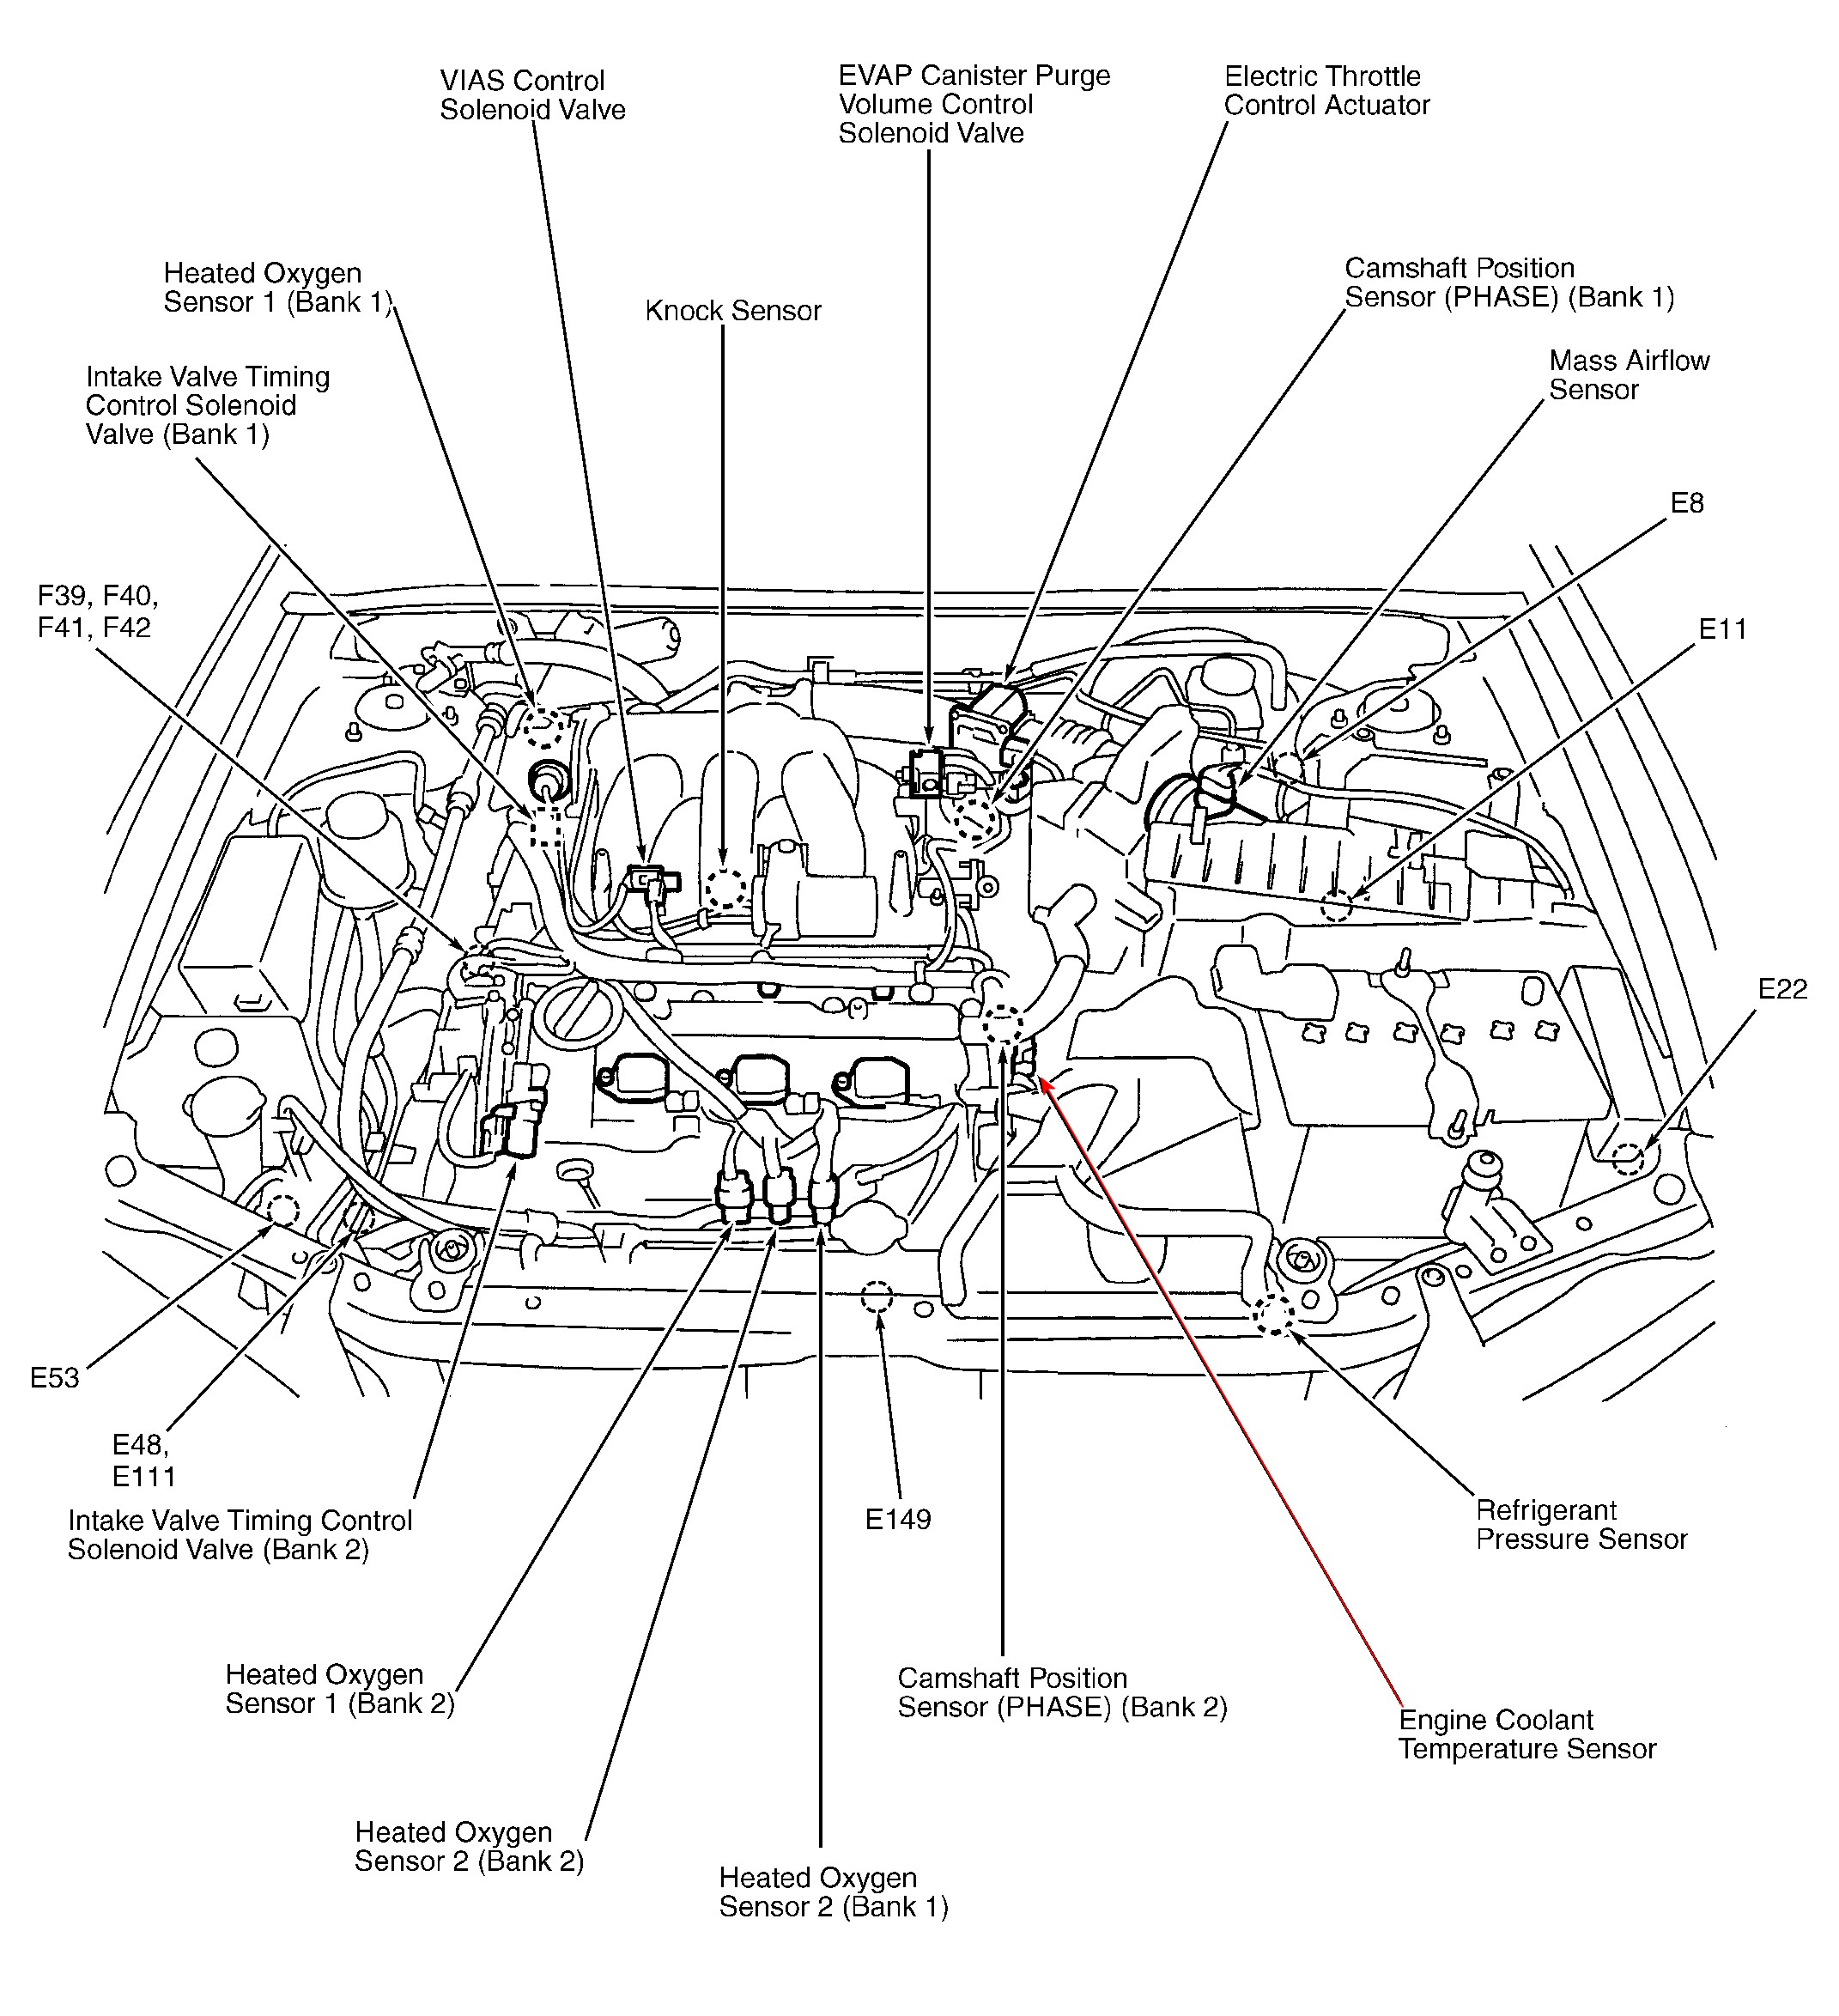 2003 Nissan Xterra Engine Diagram Likewise 2001 Nissan Pathfinder Wiring Diagram as Well 1996 Nissan Of 2003 Nissan Xterra Engine Diagram